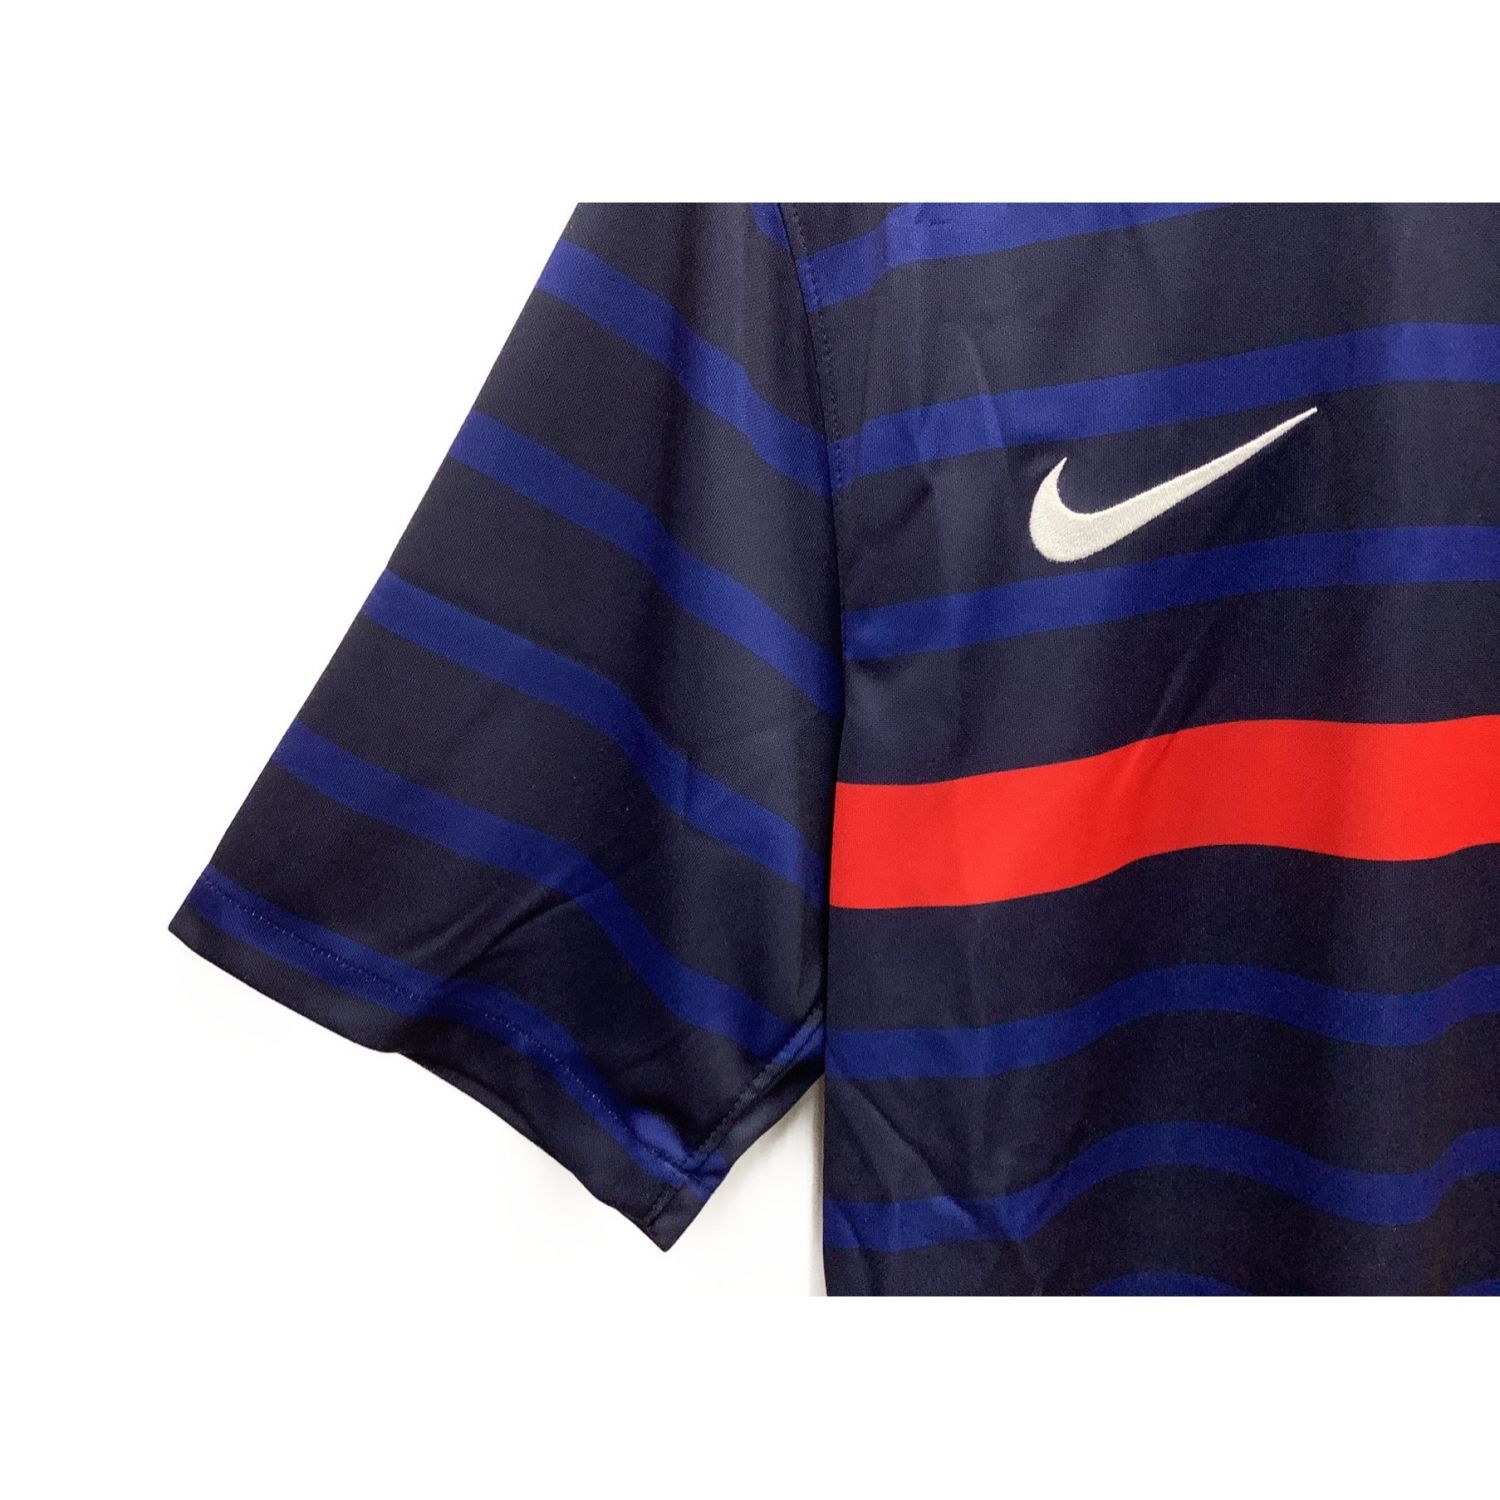 Nike ナイキ サッカーユニフォーム メンズ Usサイズm ネイビー フランス代表 ホーム 半袖レプリカユニフォーム Cd0700 498 トレファクonline